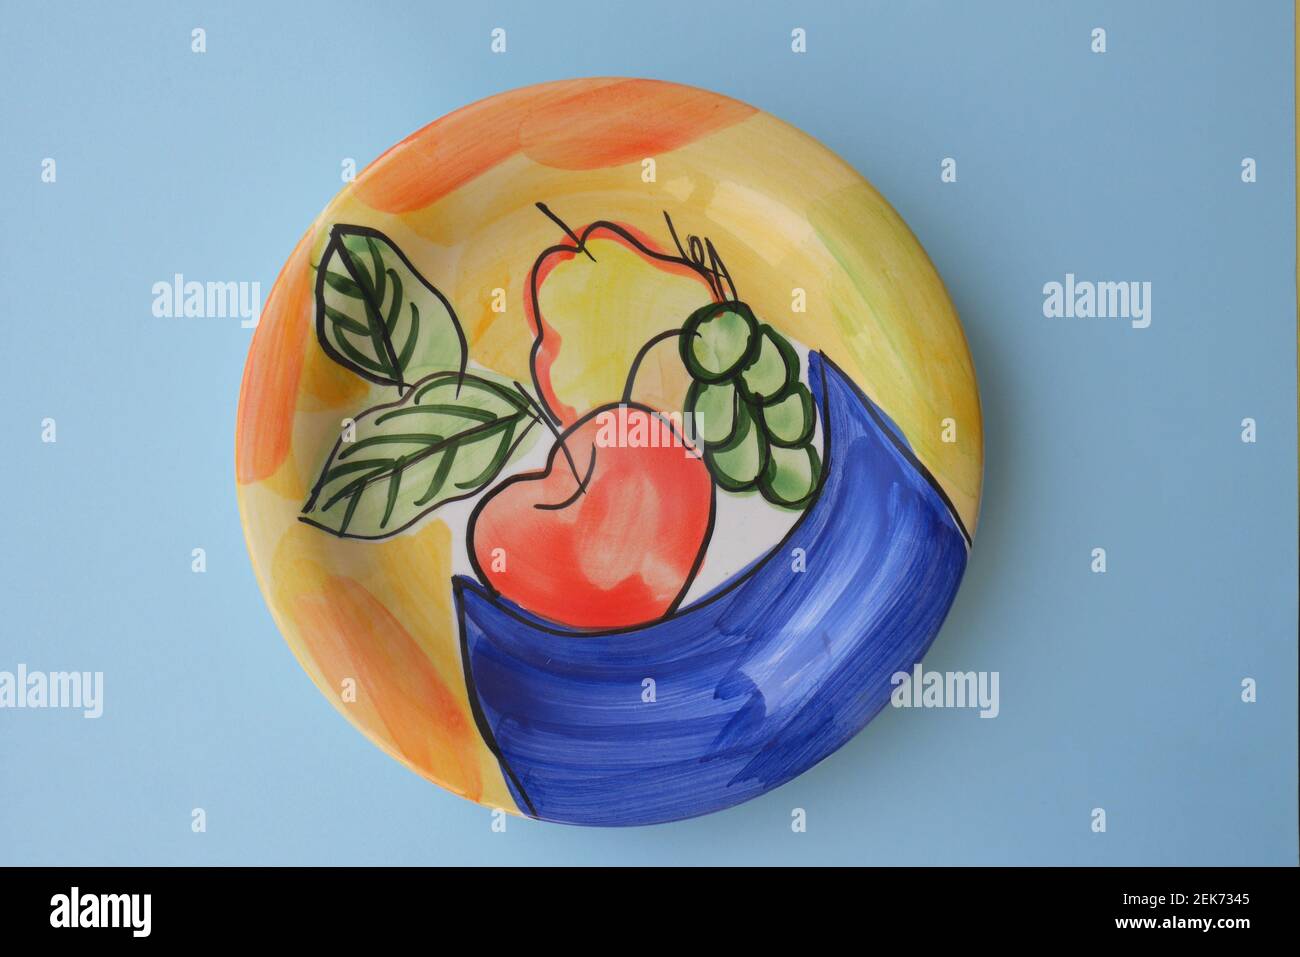 Leere Keramik-Beilagenteller mit Fruchtdesign Stockfoto